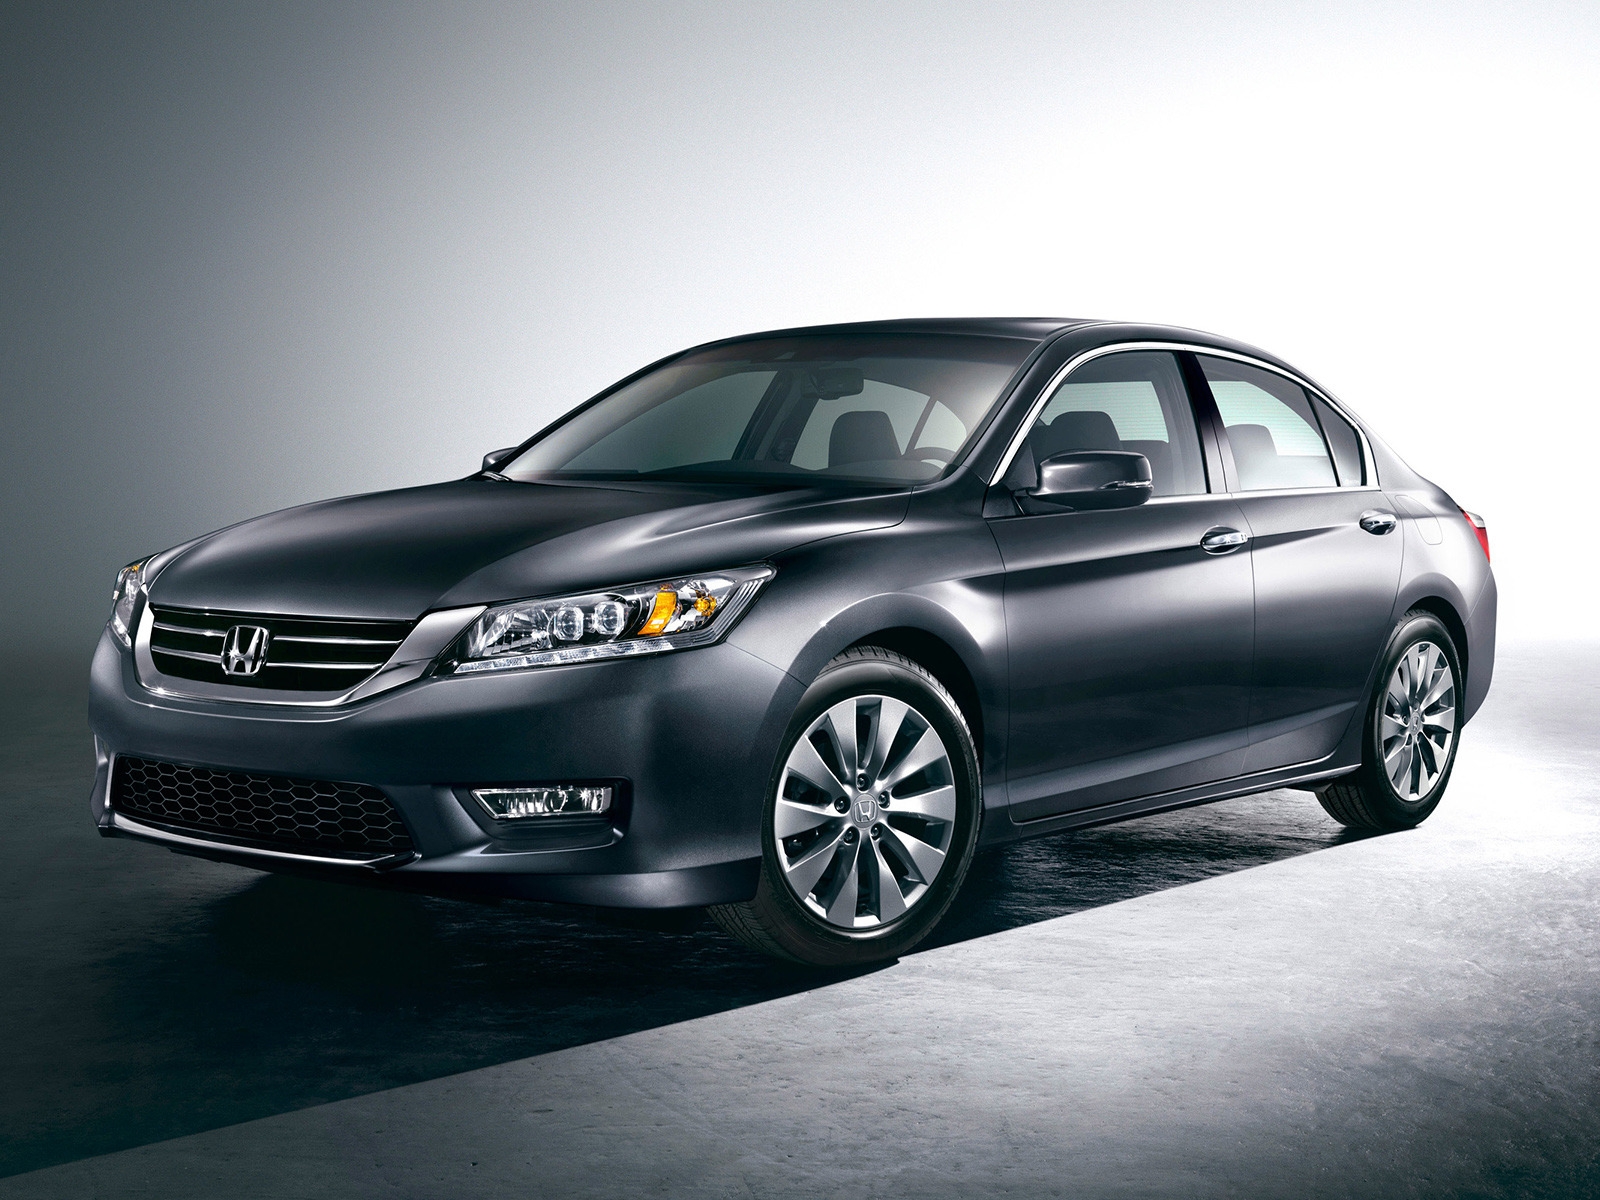 2013 Honda Accord for 1600 x 1200 resolution